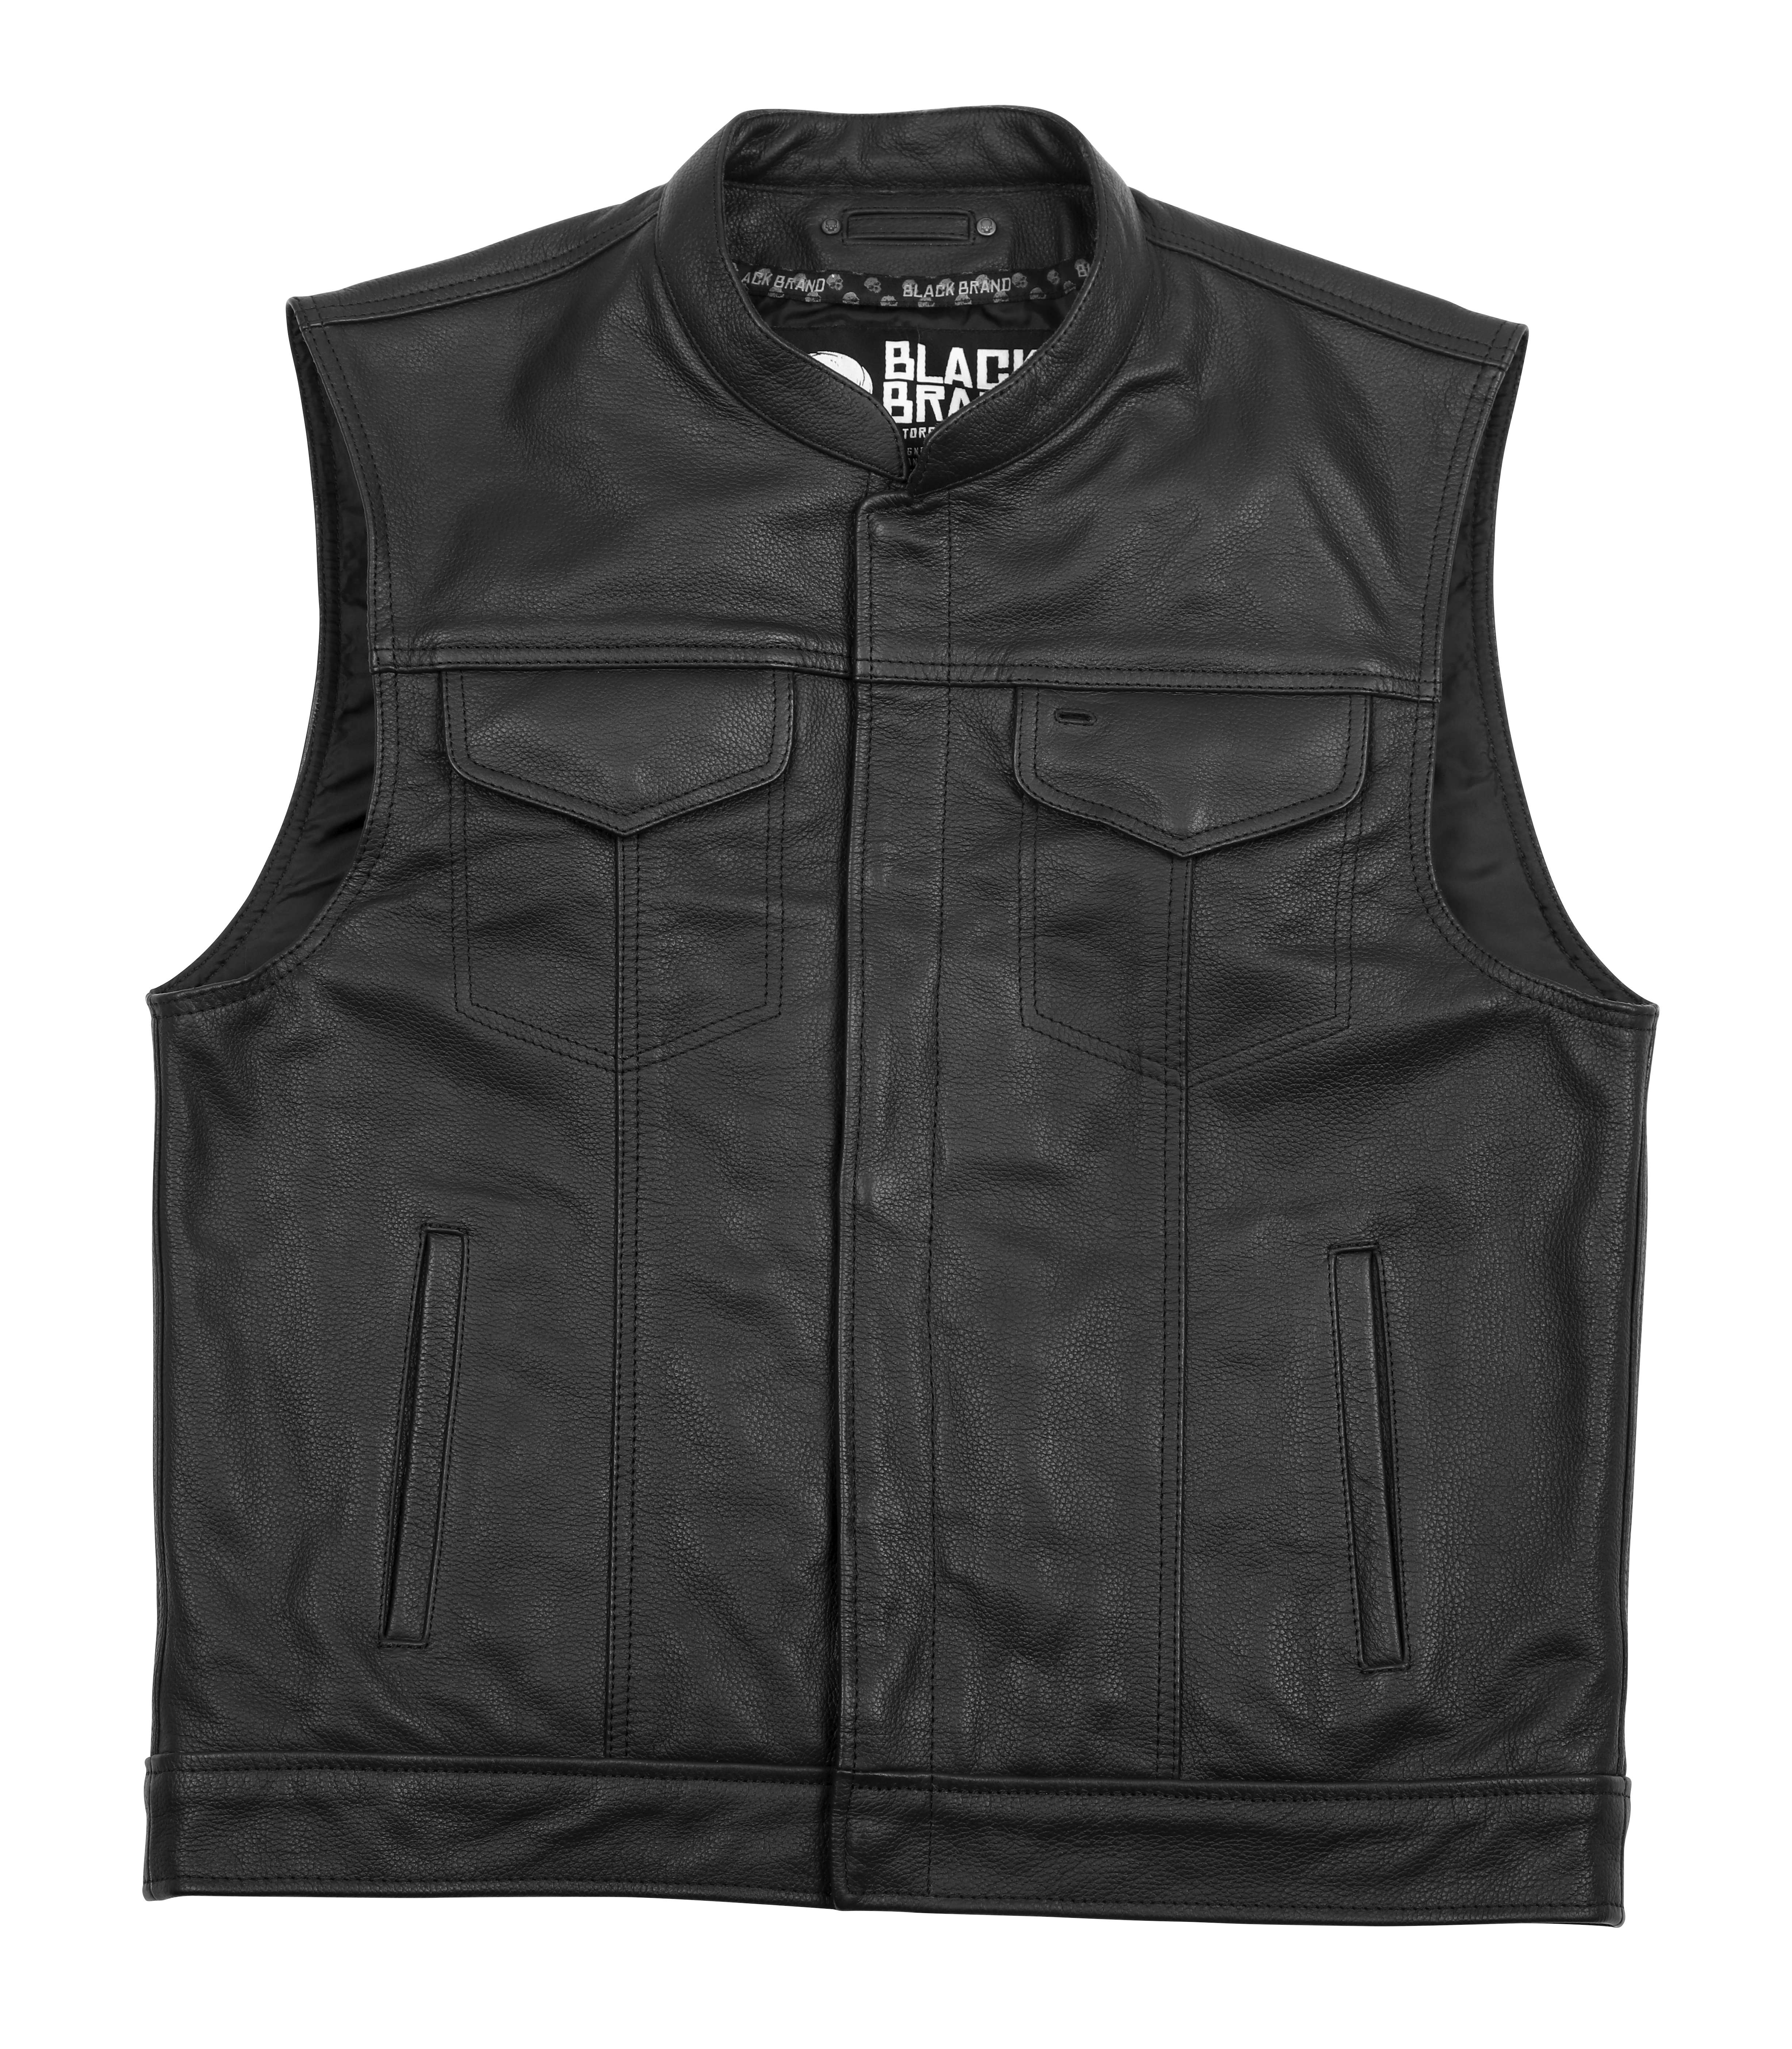 black brand club vest